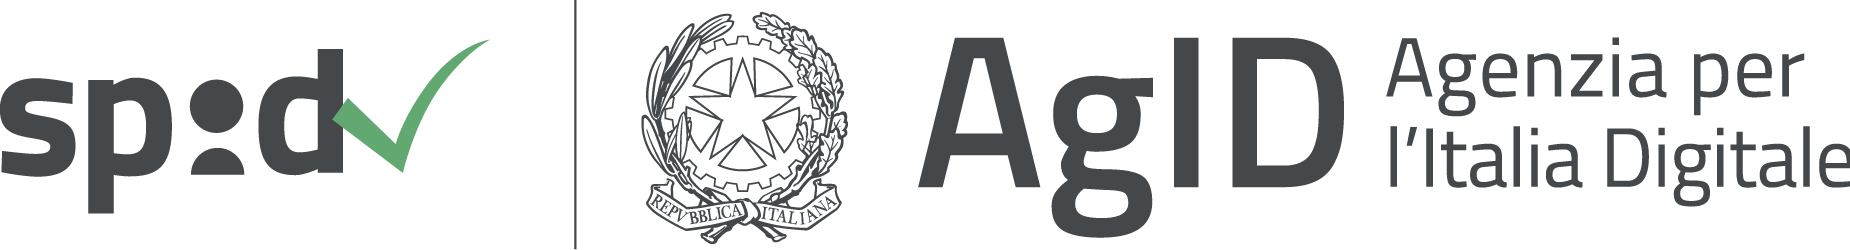 Logo SPID - Agid